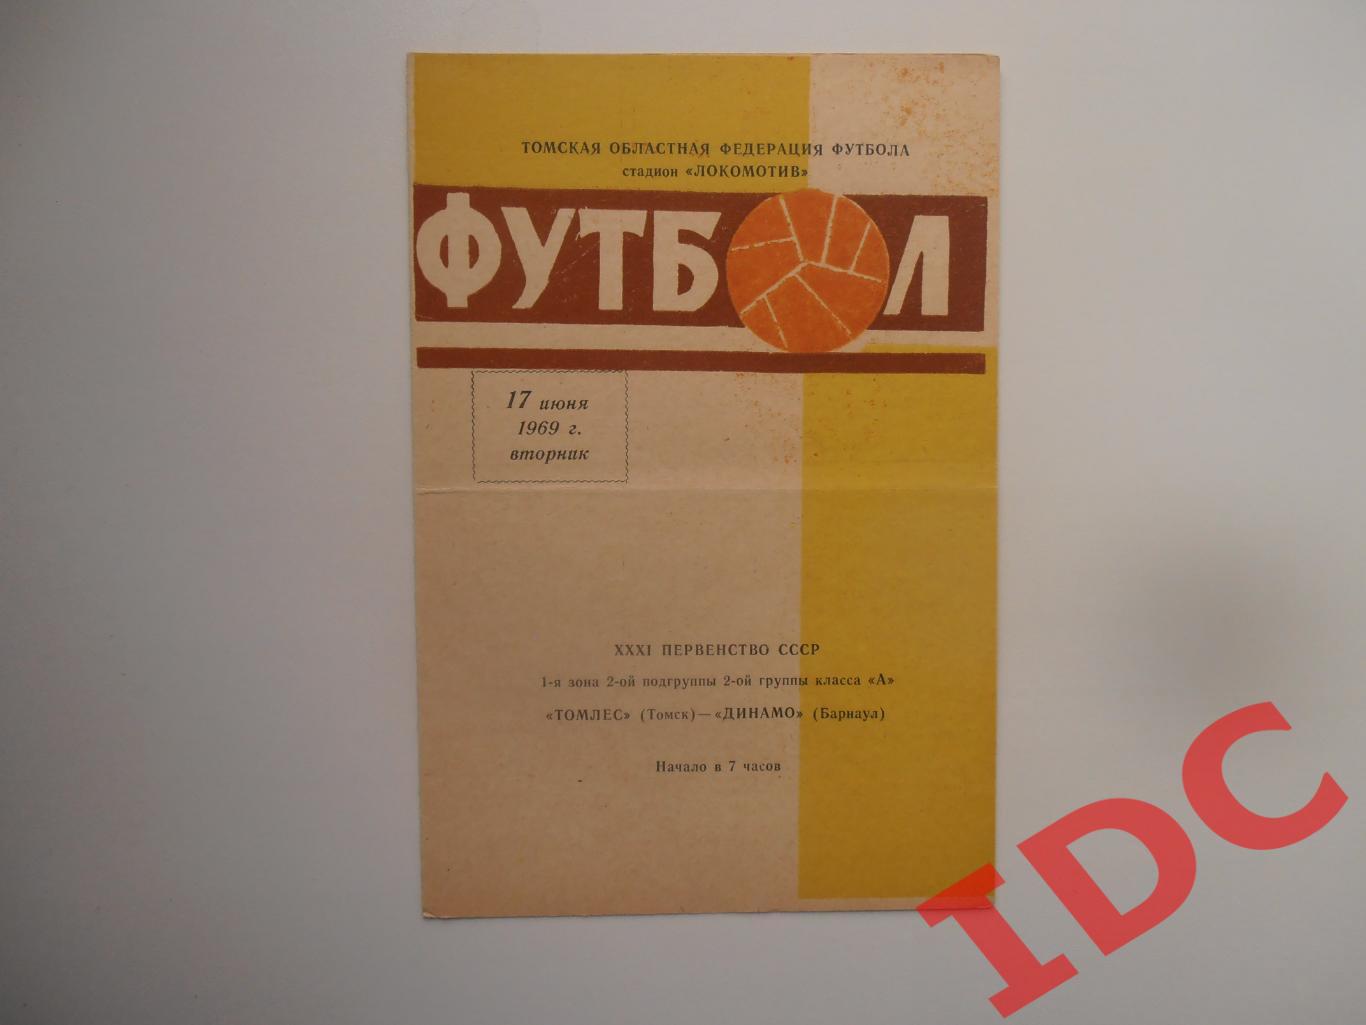 Томлес Томск-Динамо Барнаул 17 июня 1969